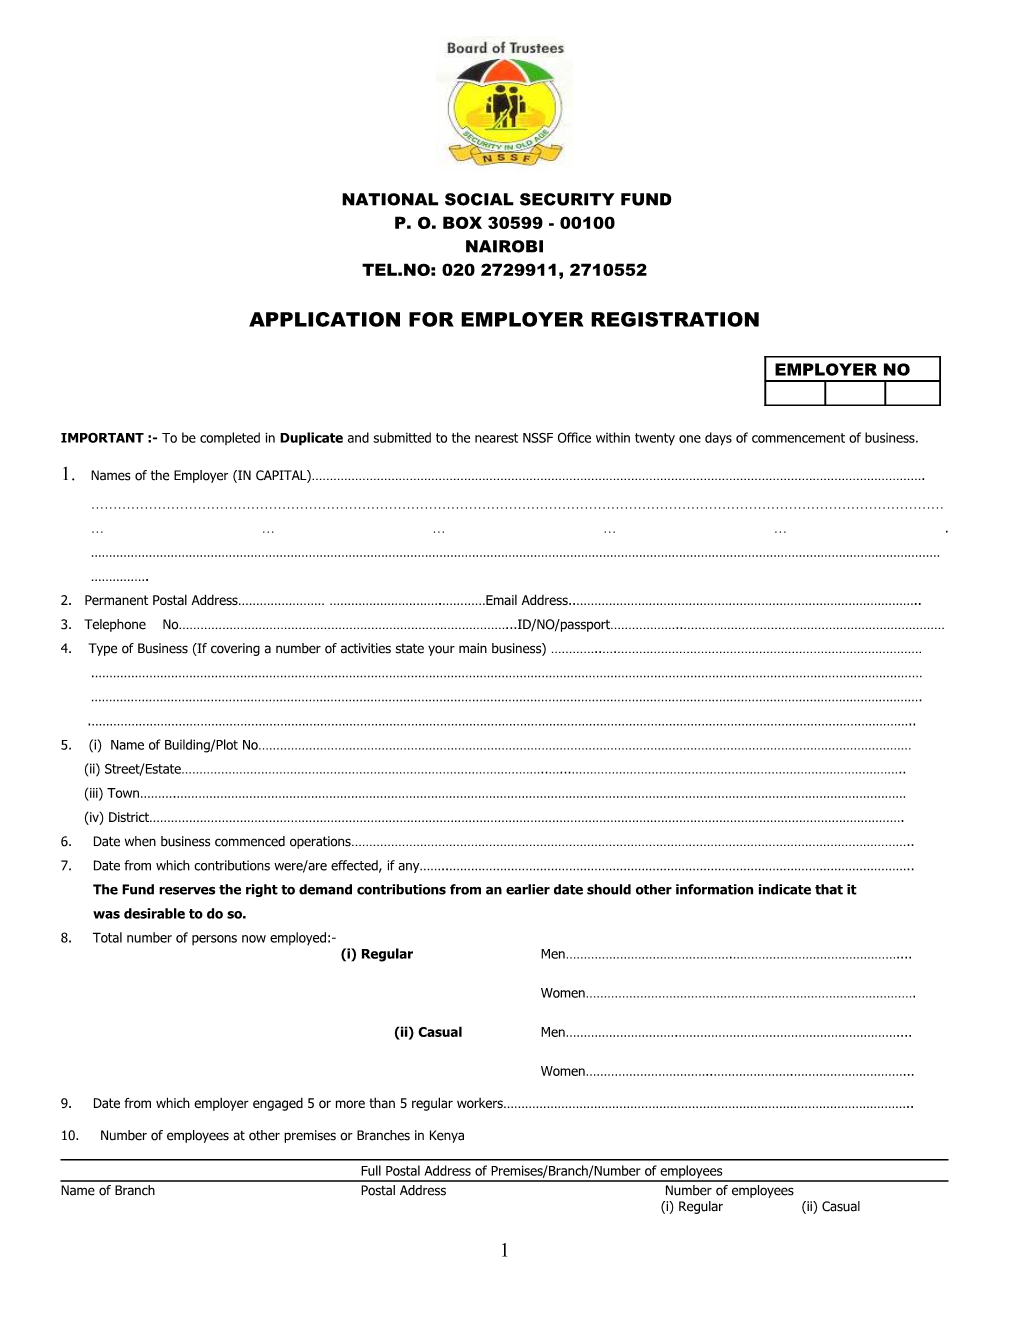 Application for Employer Registration